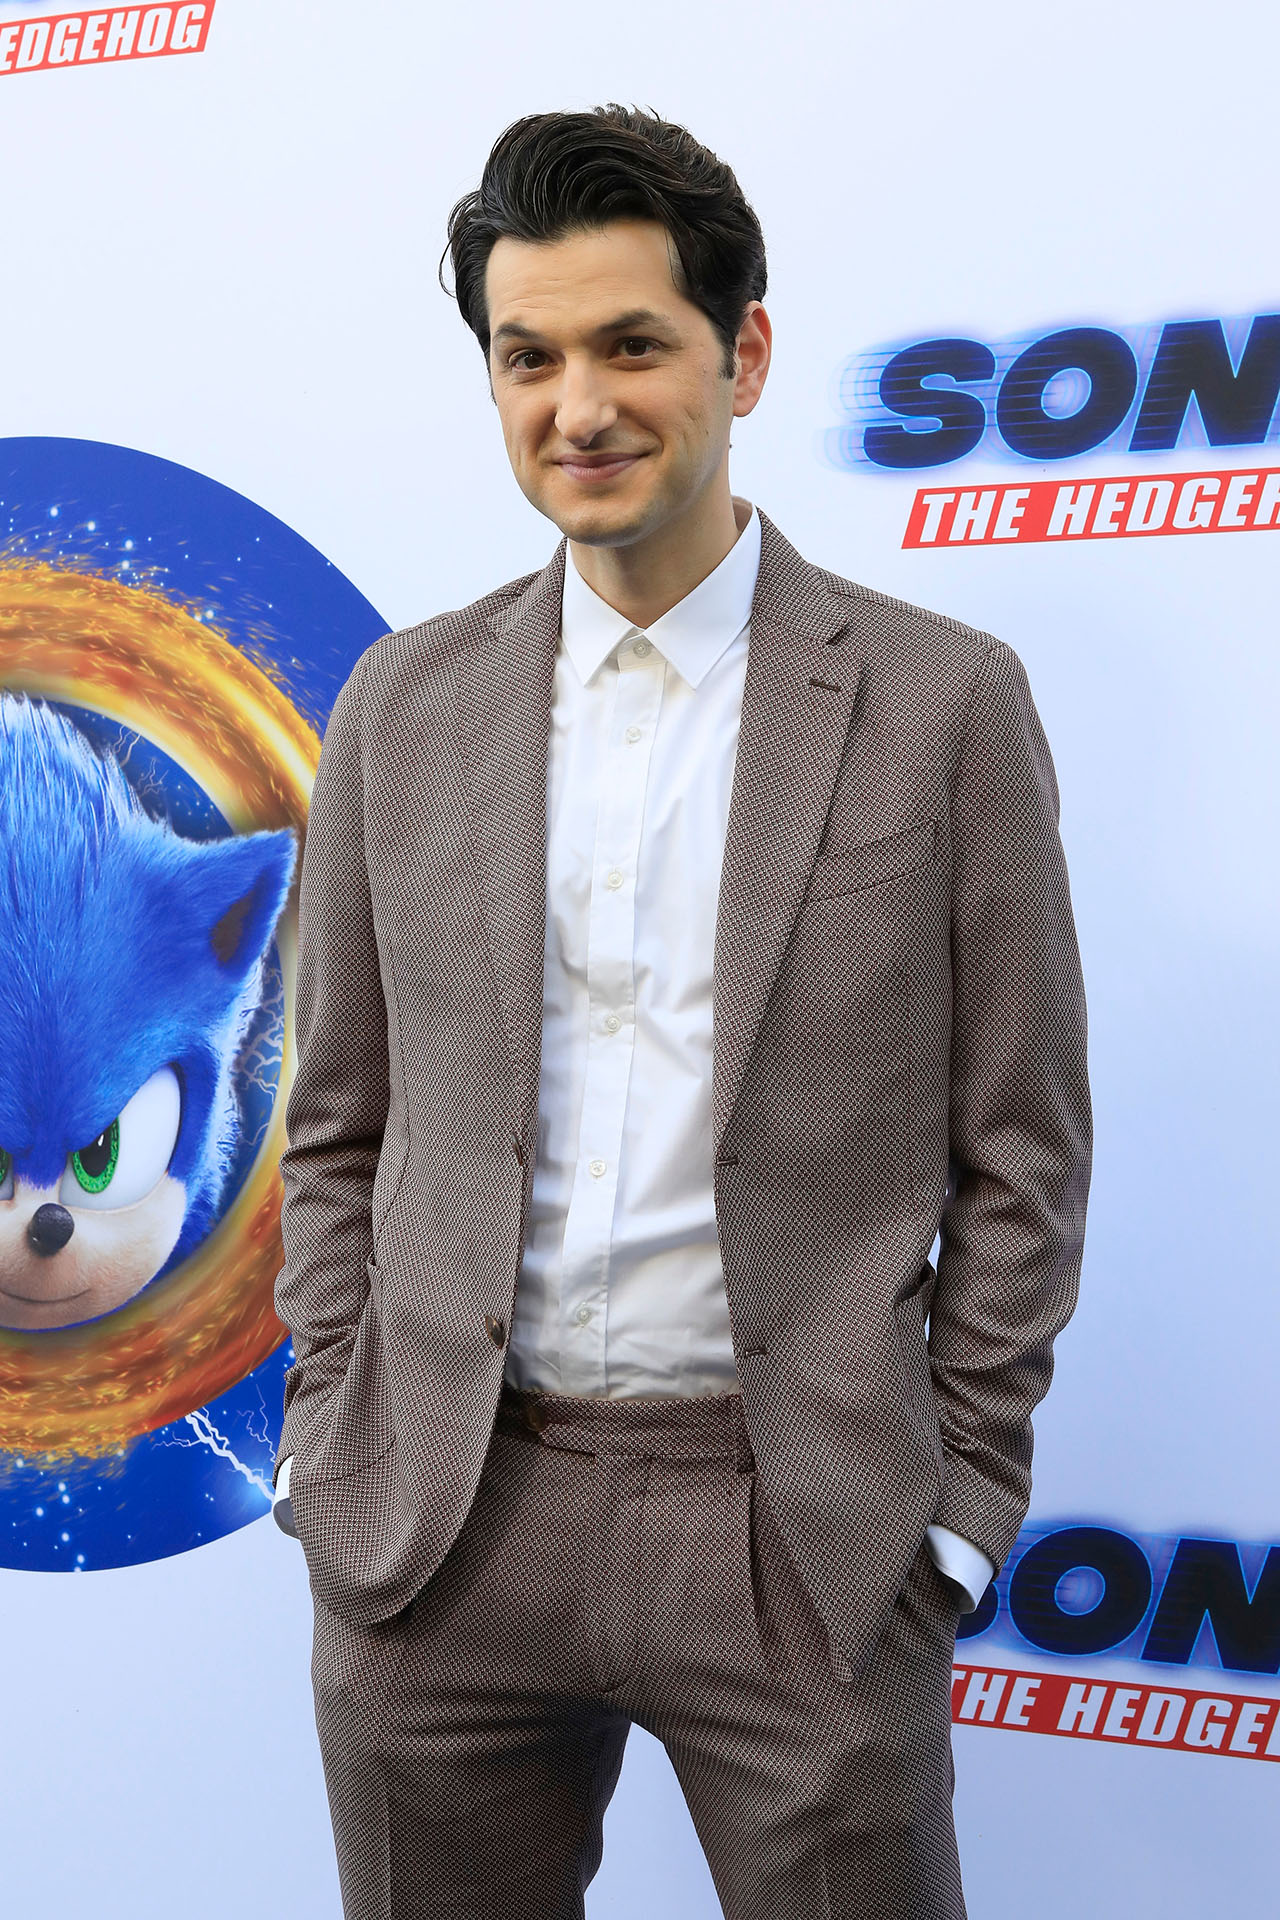 SONIC the Hedgehog Movie - Cast Interviews - Premiere - Jim Carrey James  Marsden Ben Schwartz - SEGA 